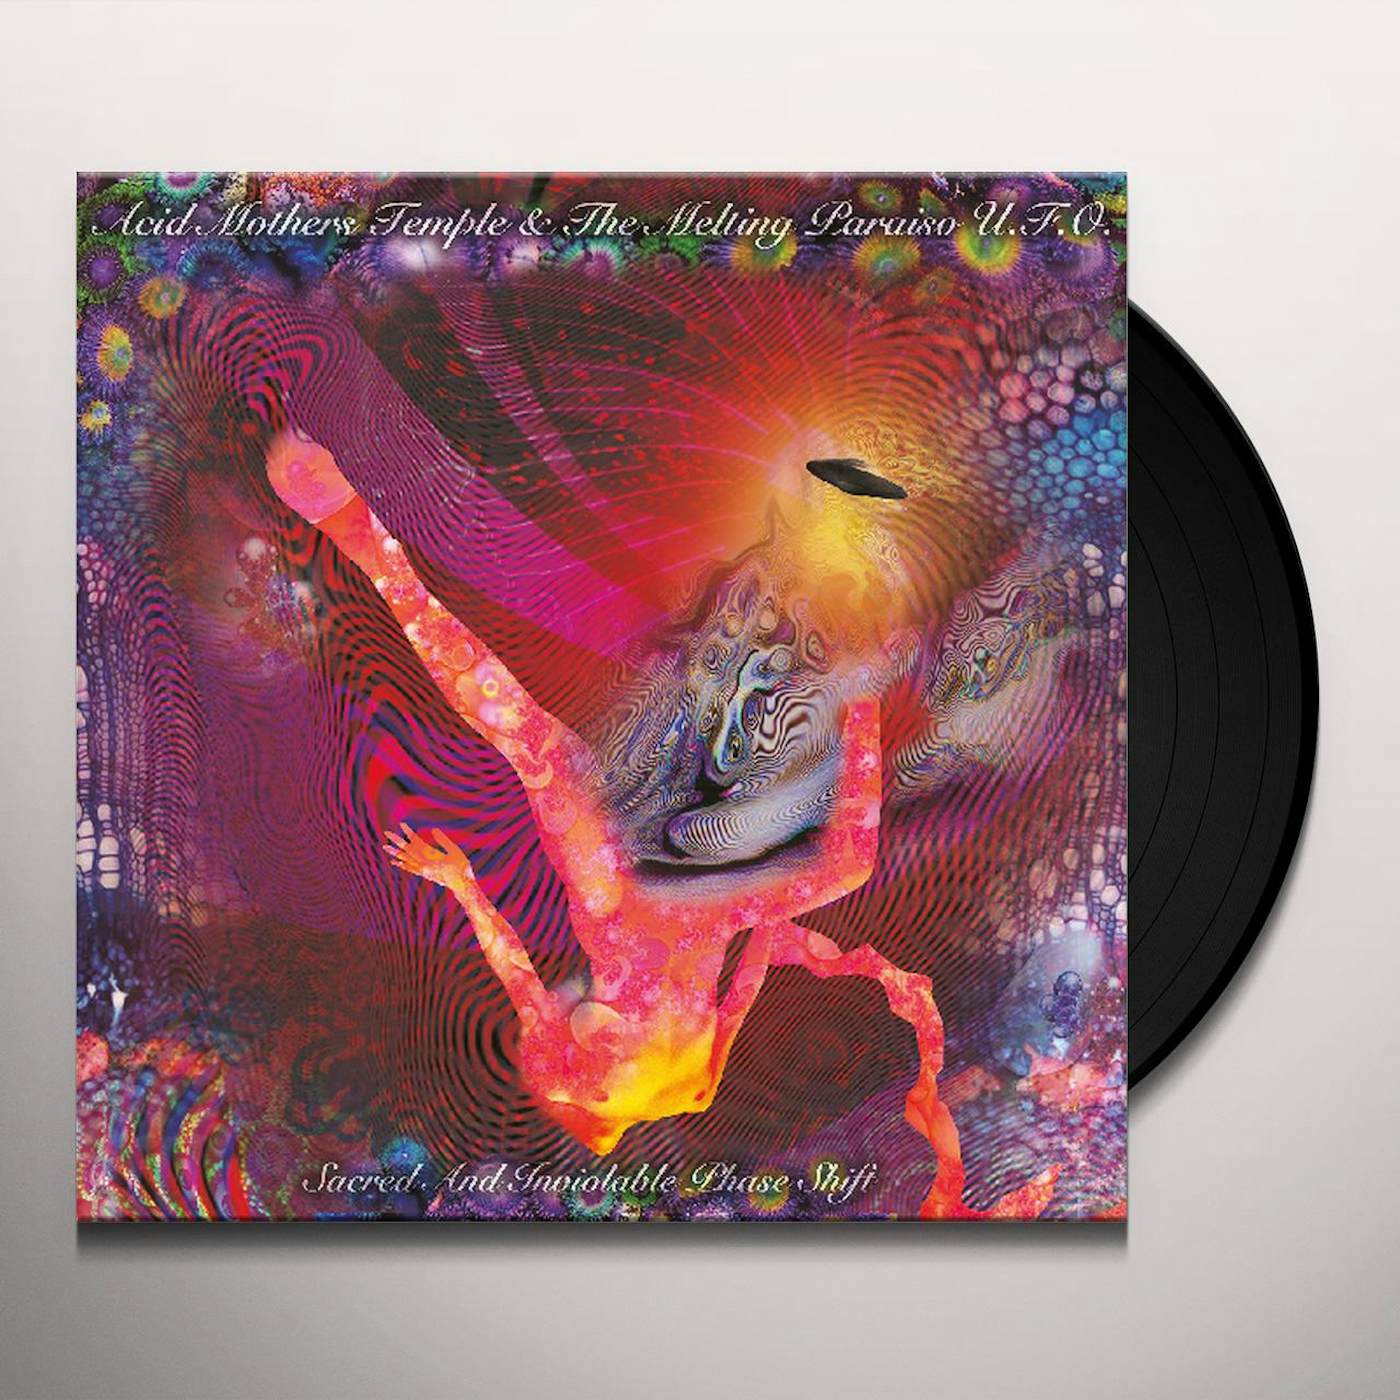 Acid Mothers Temple & Melting Paraiso U.F.O. SACRED & INVIOLABLE PHASE SHIFT Vinyl Record